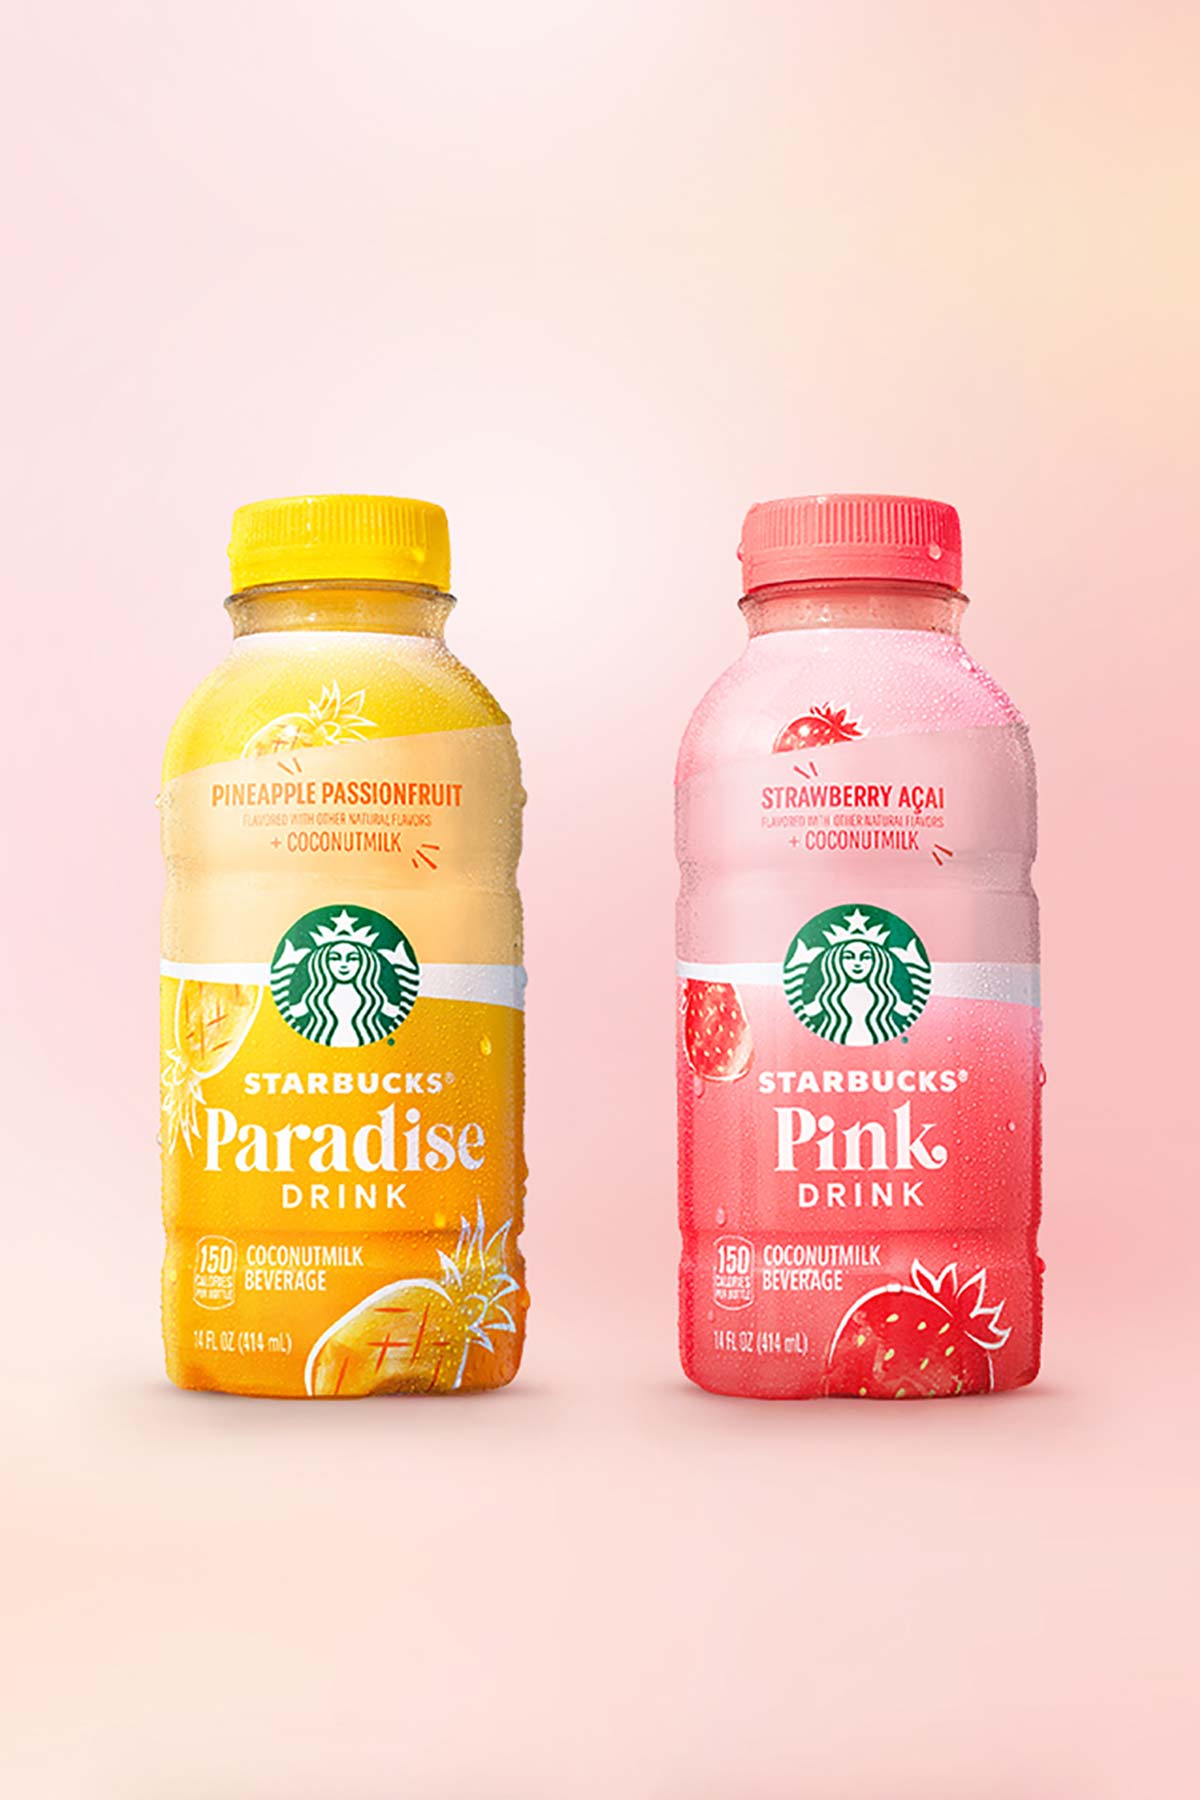 Bottled Starbucks Paradise Drink and Pink Drink.